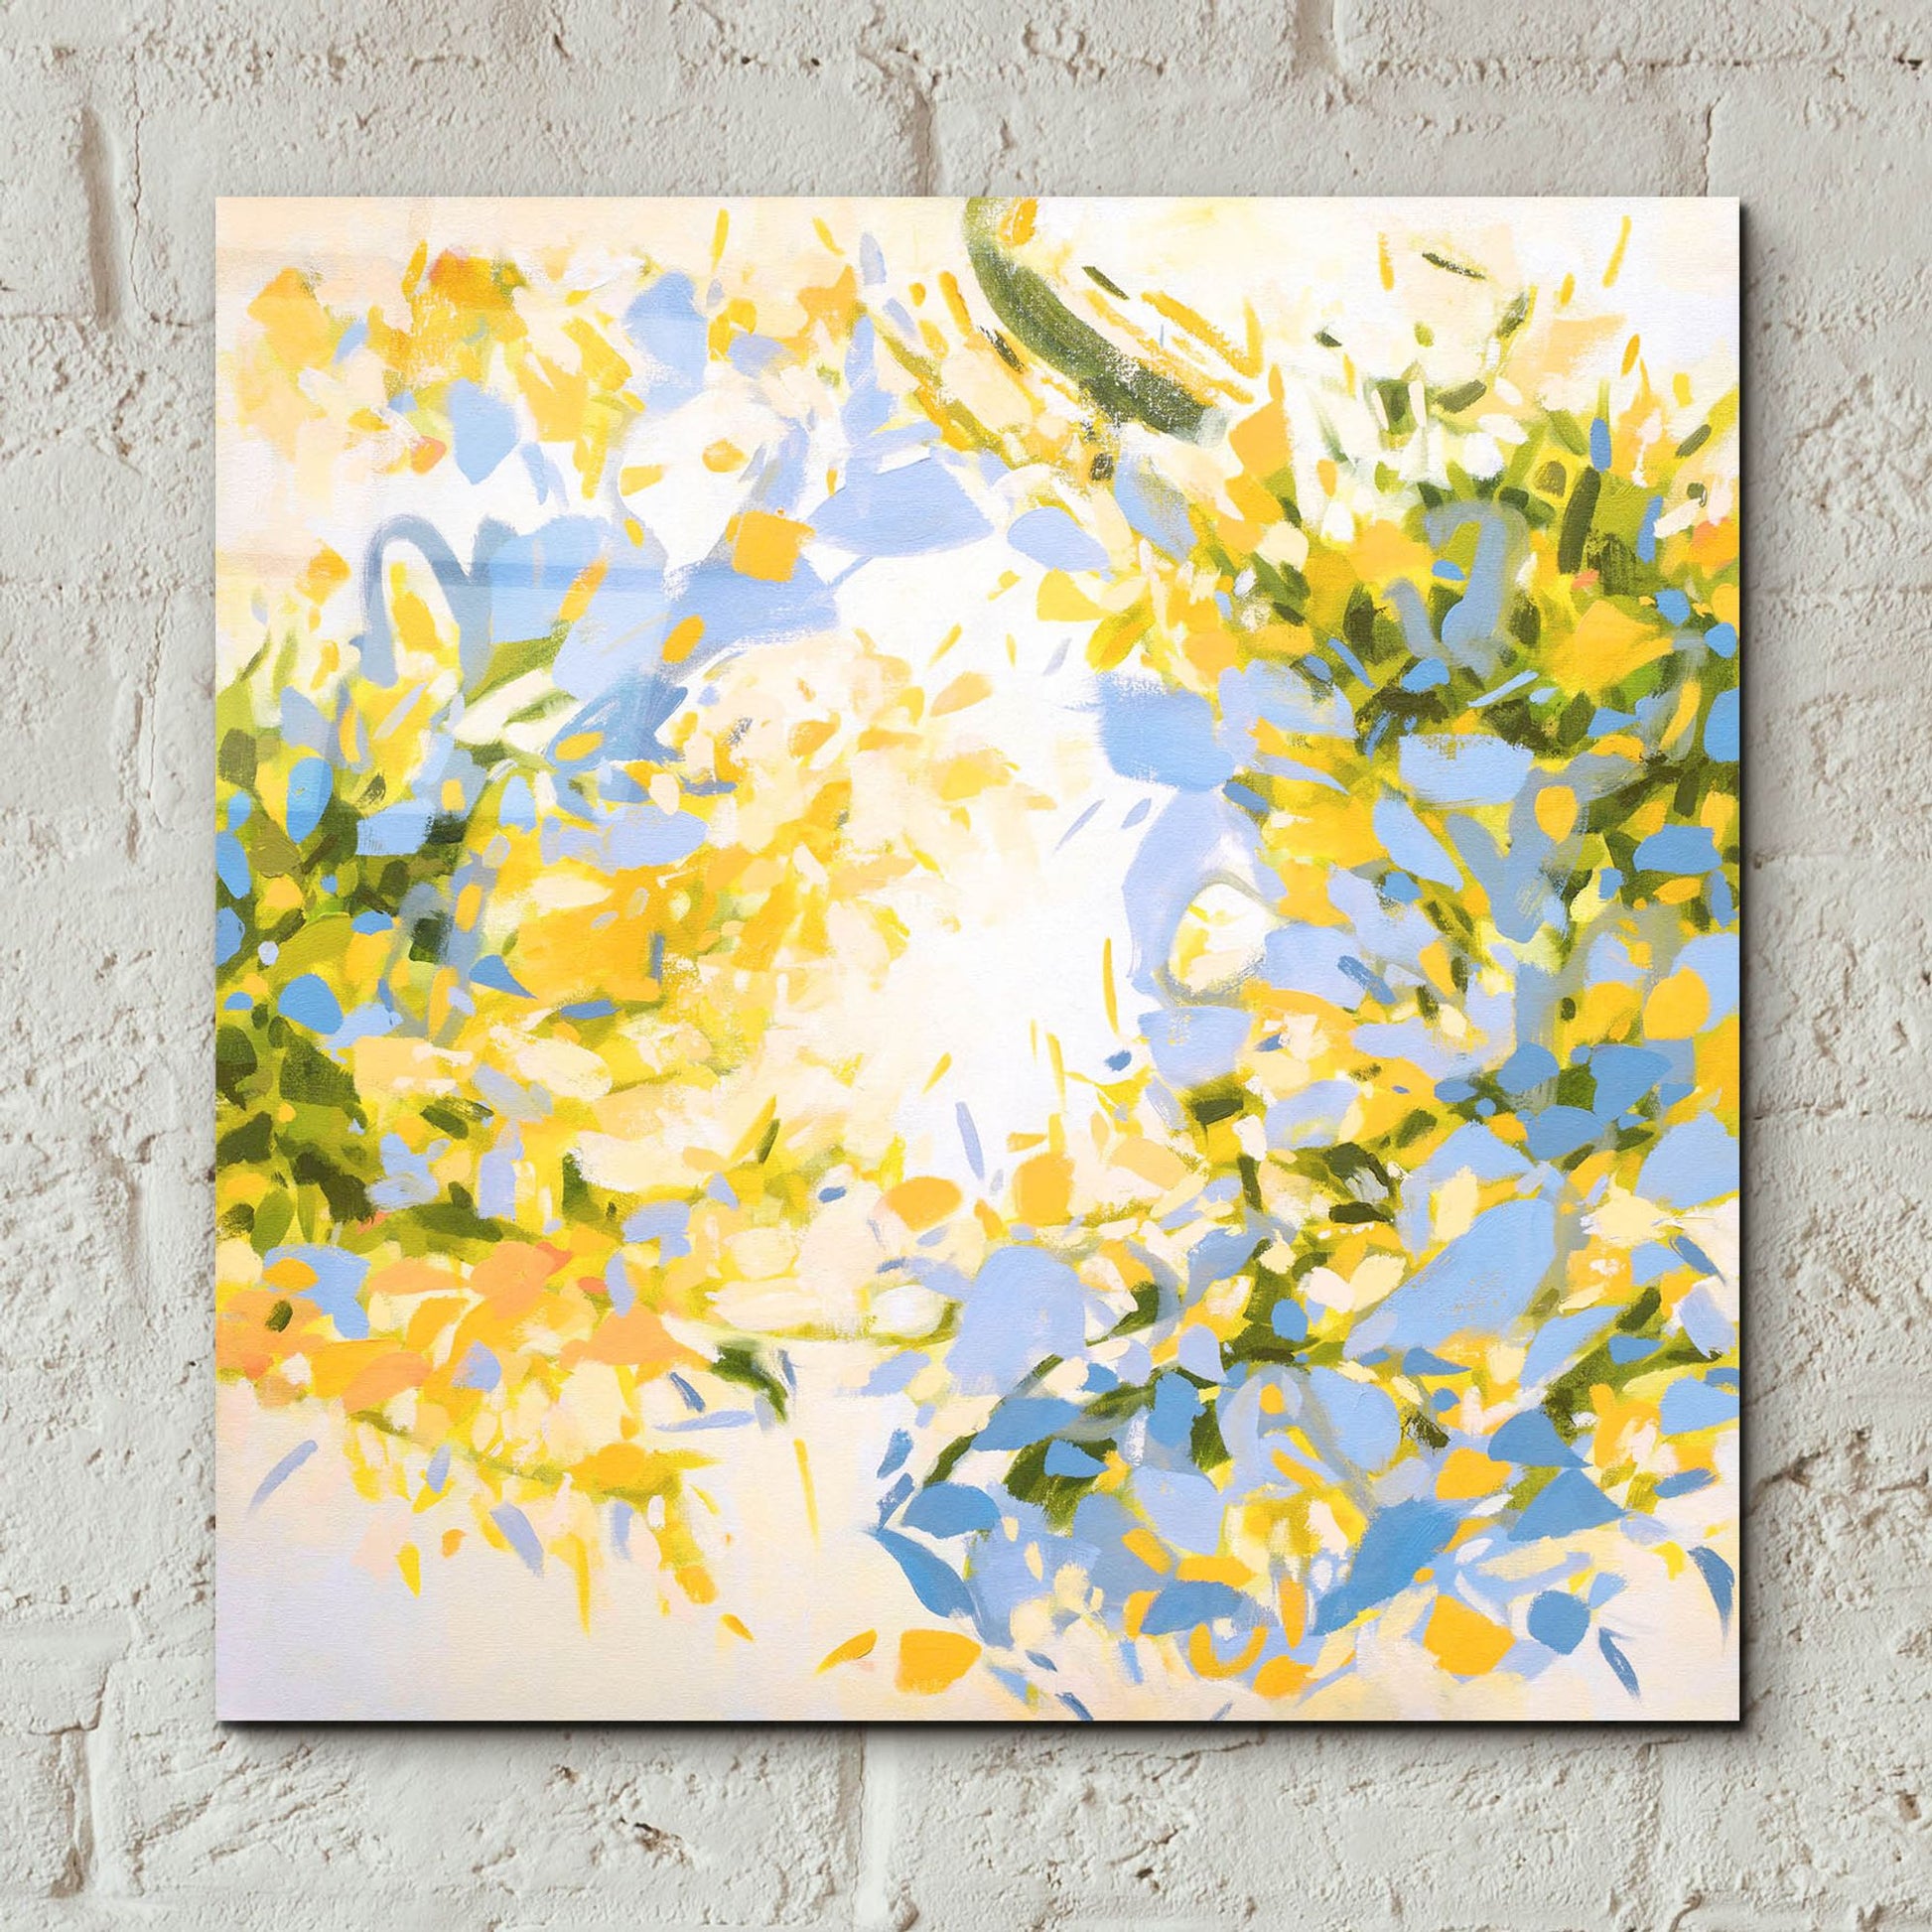 Epic Art ' Spring Bliss' by Cameron Schmitz, Acrylic Glass Wall Art,12x12